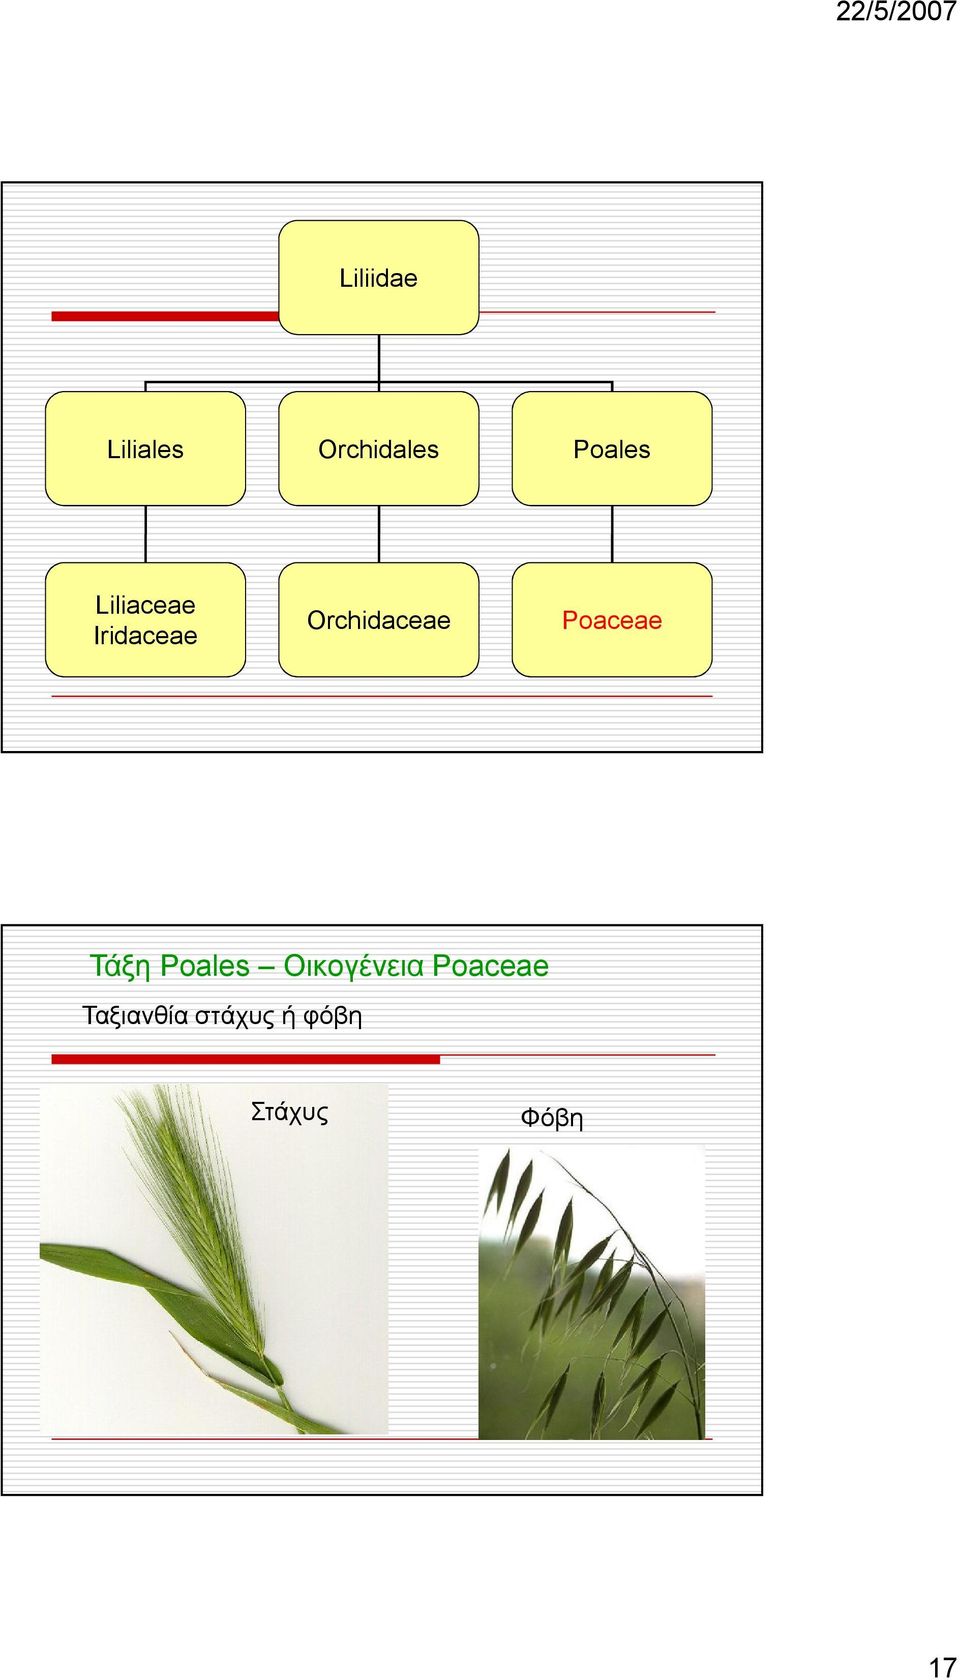 Orchidaceae Poaceae